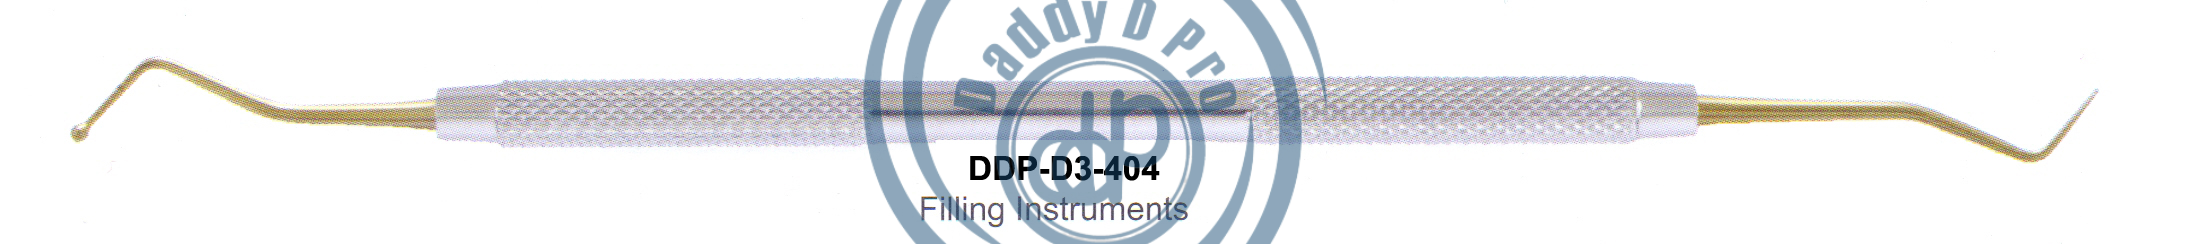 images/DDP-D3-404.png